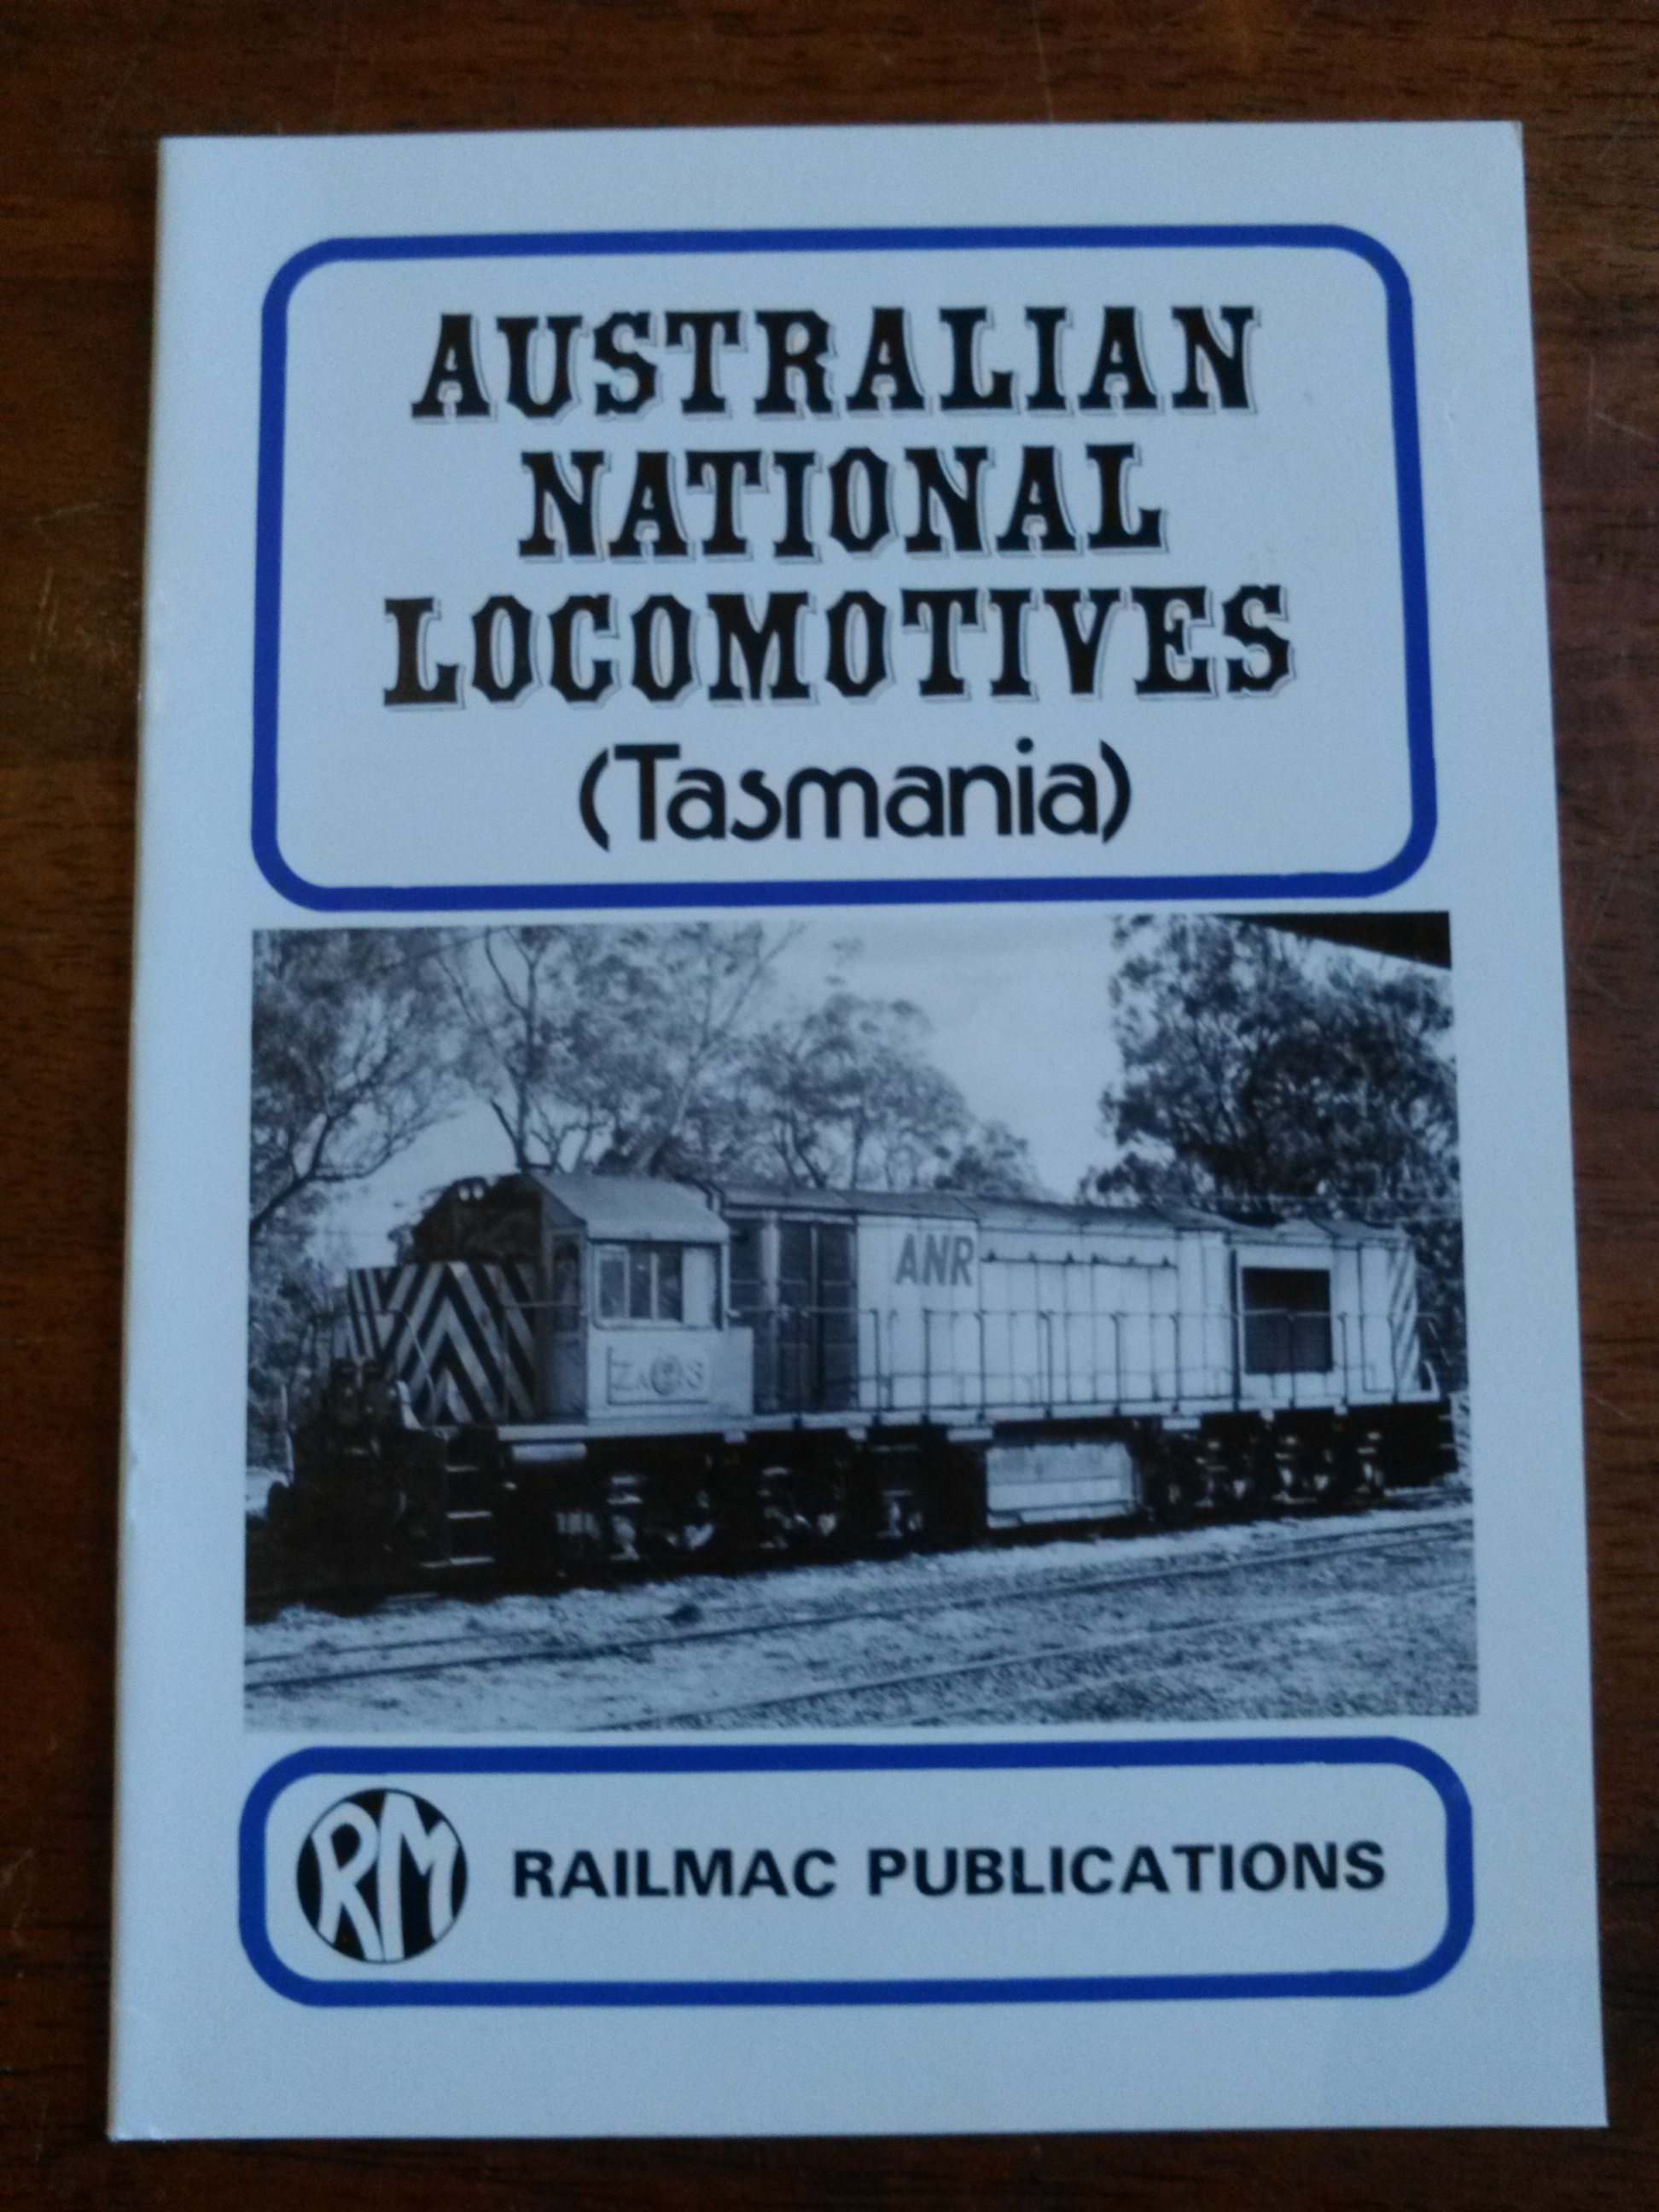 Australian National Locomotives (Tasmania)